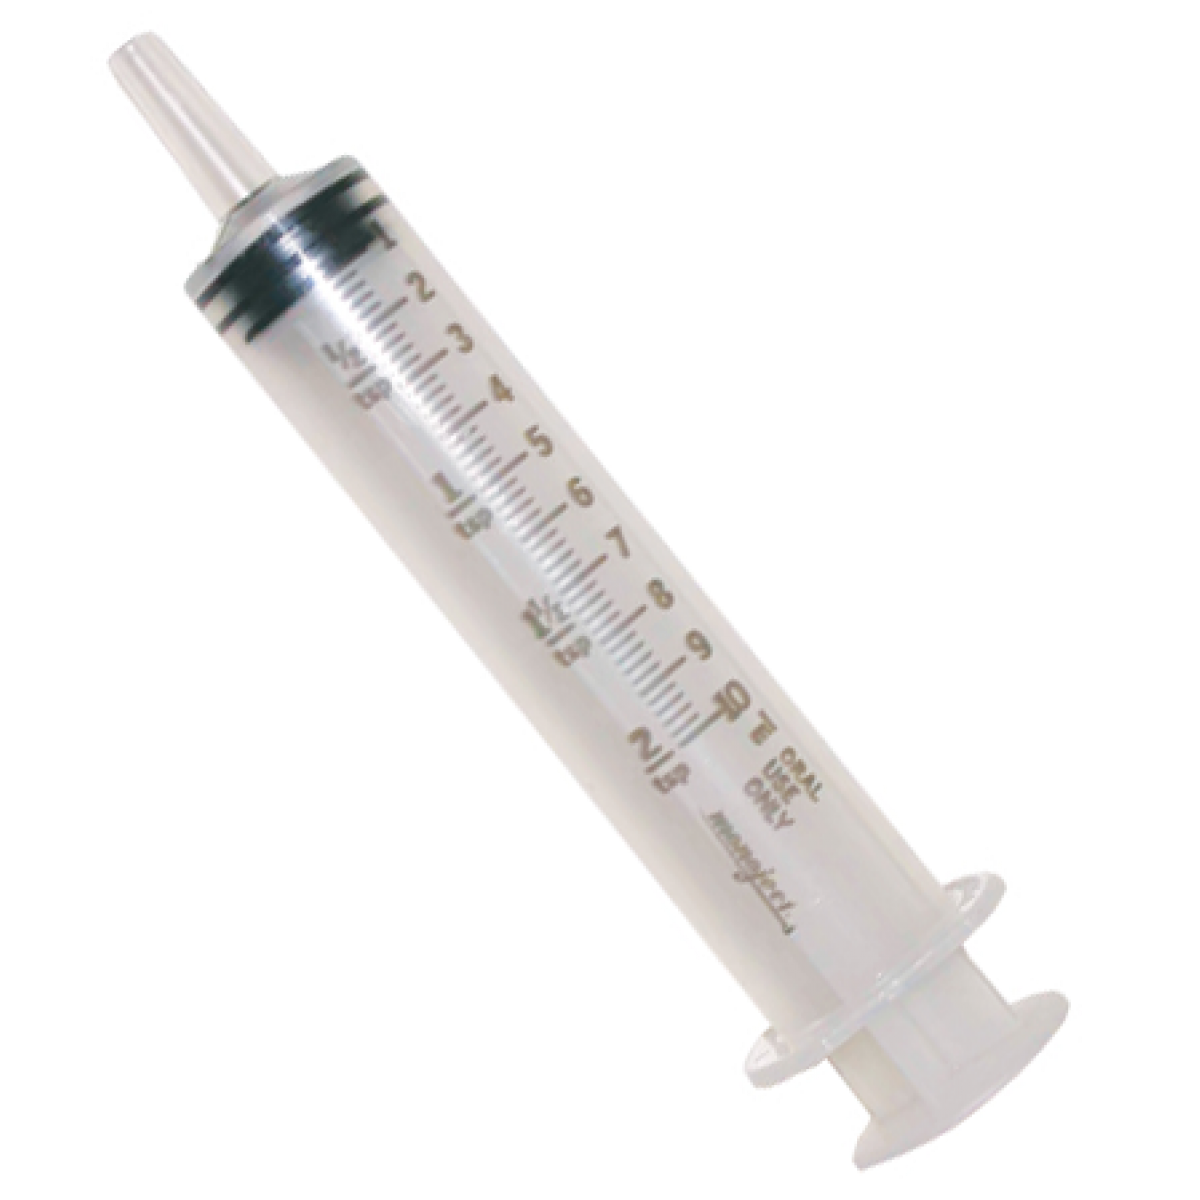 medication clipart syringe